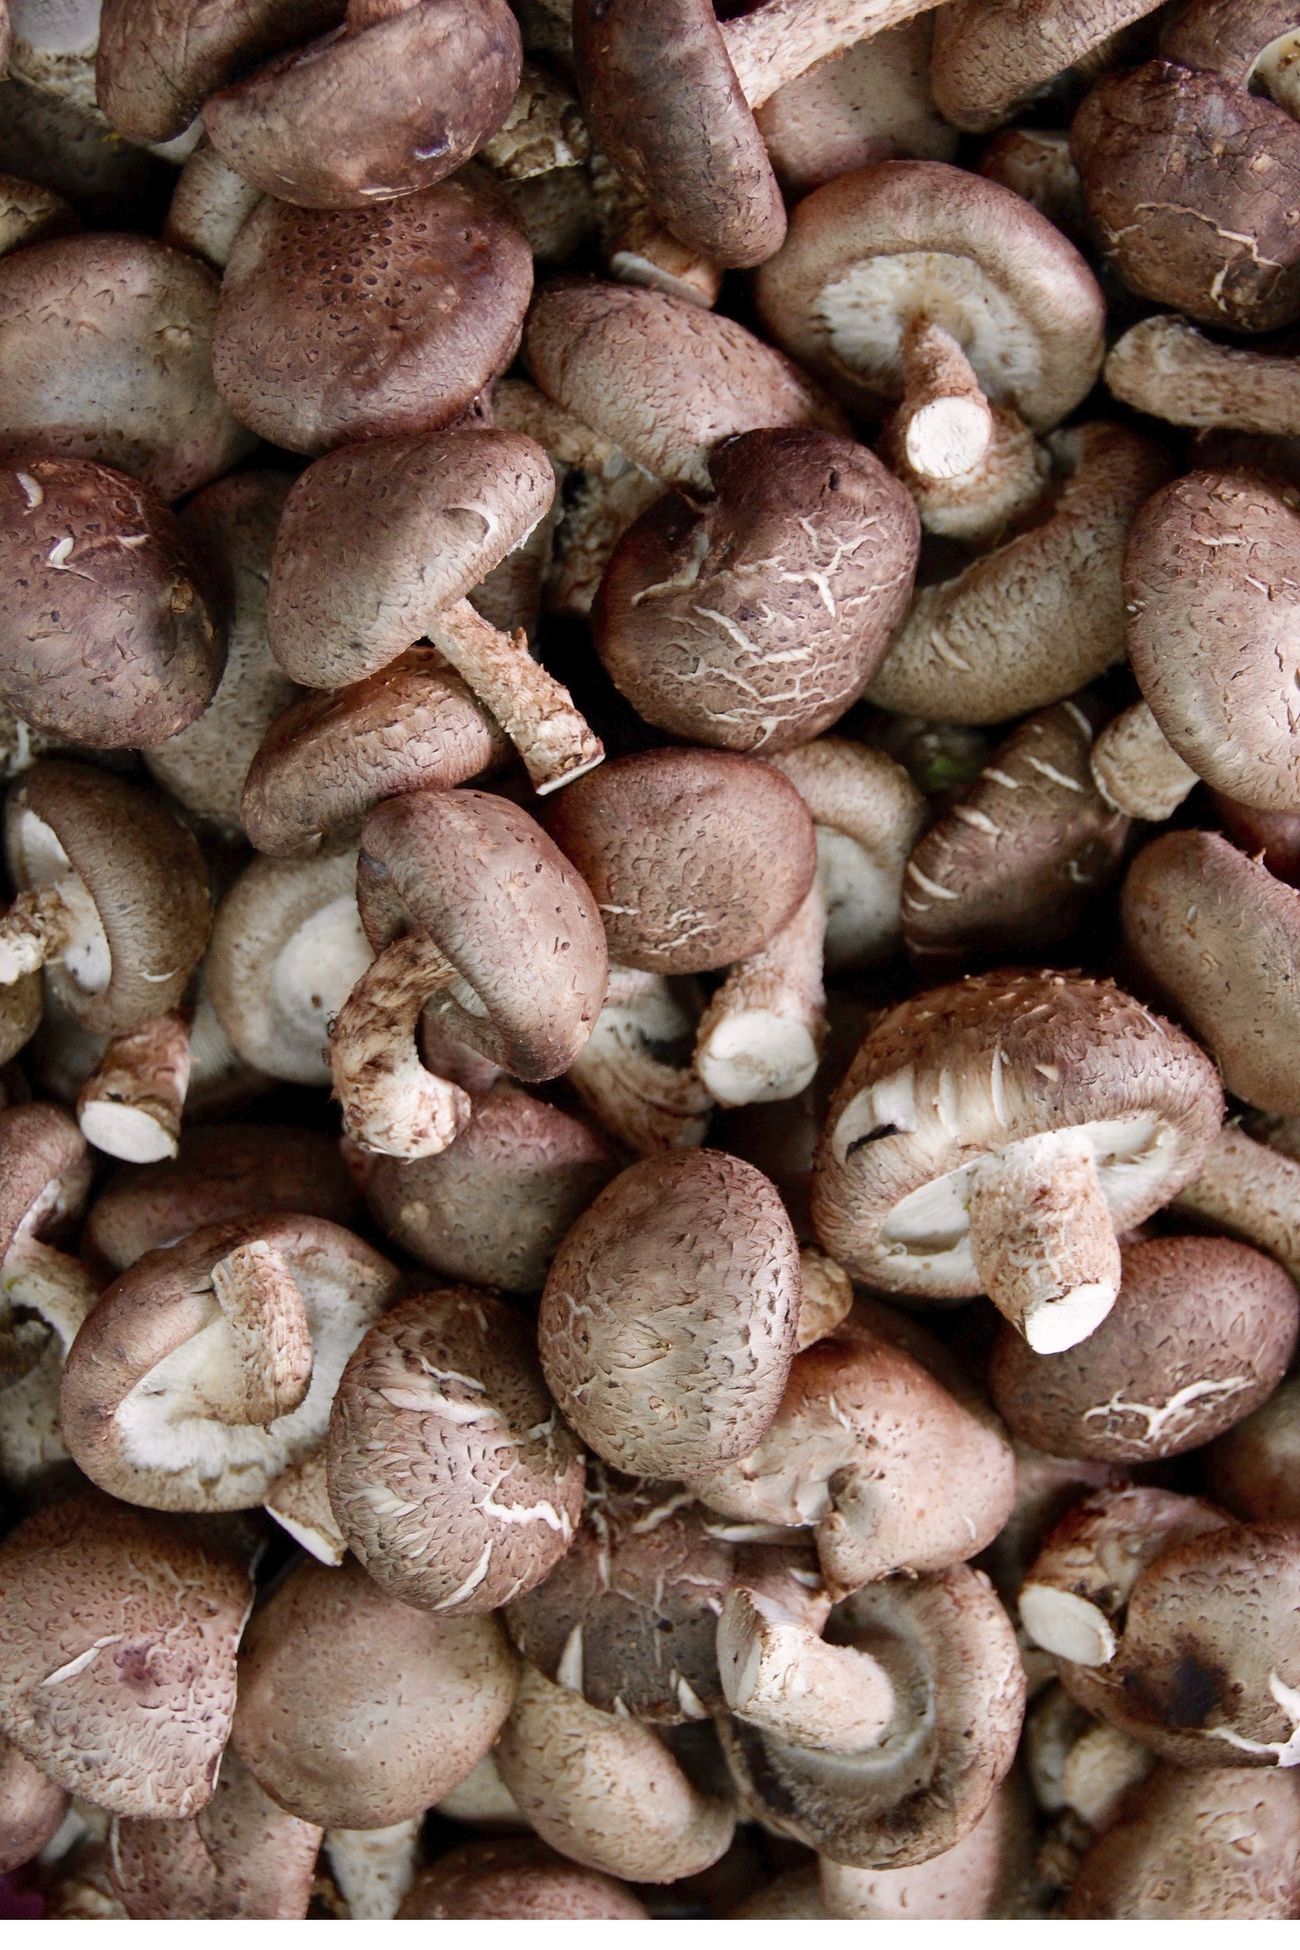 Group of edible mushrooms